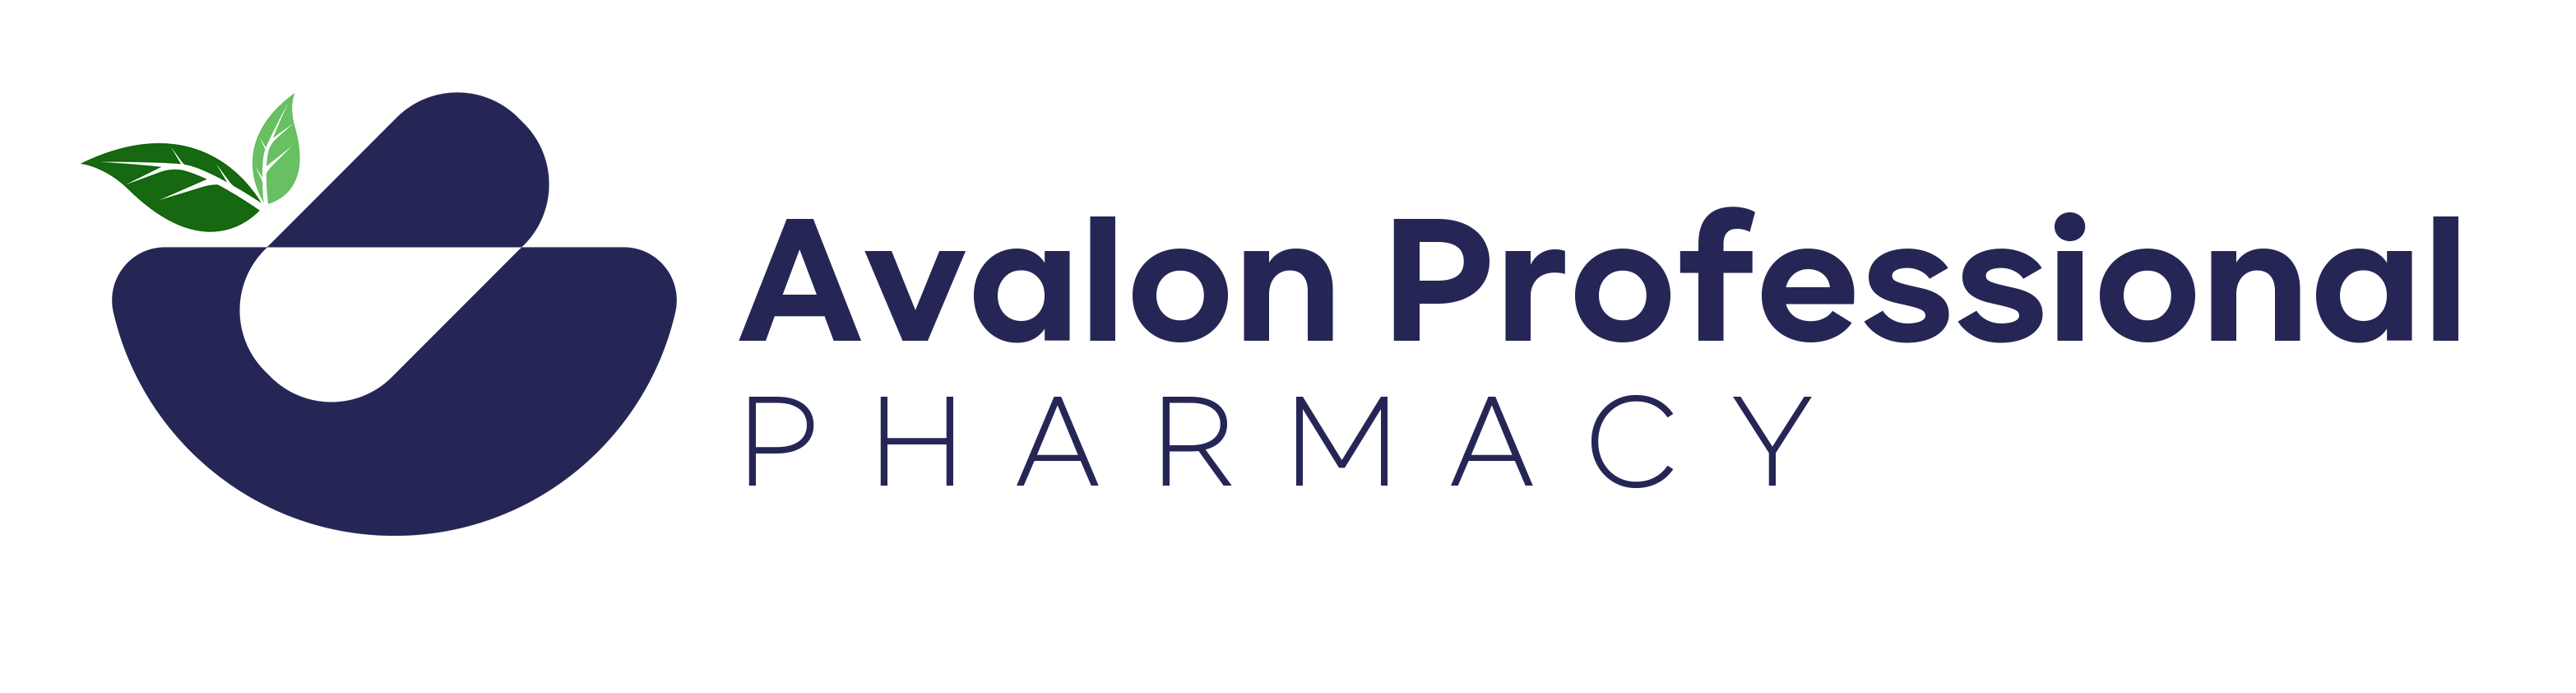 Avalon Professional Pharmacy